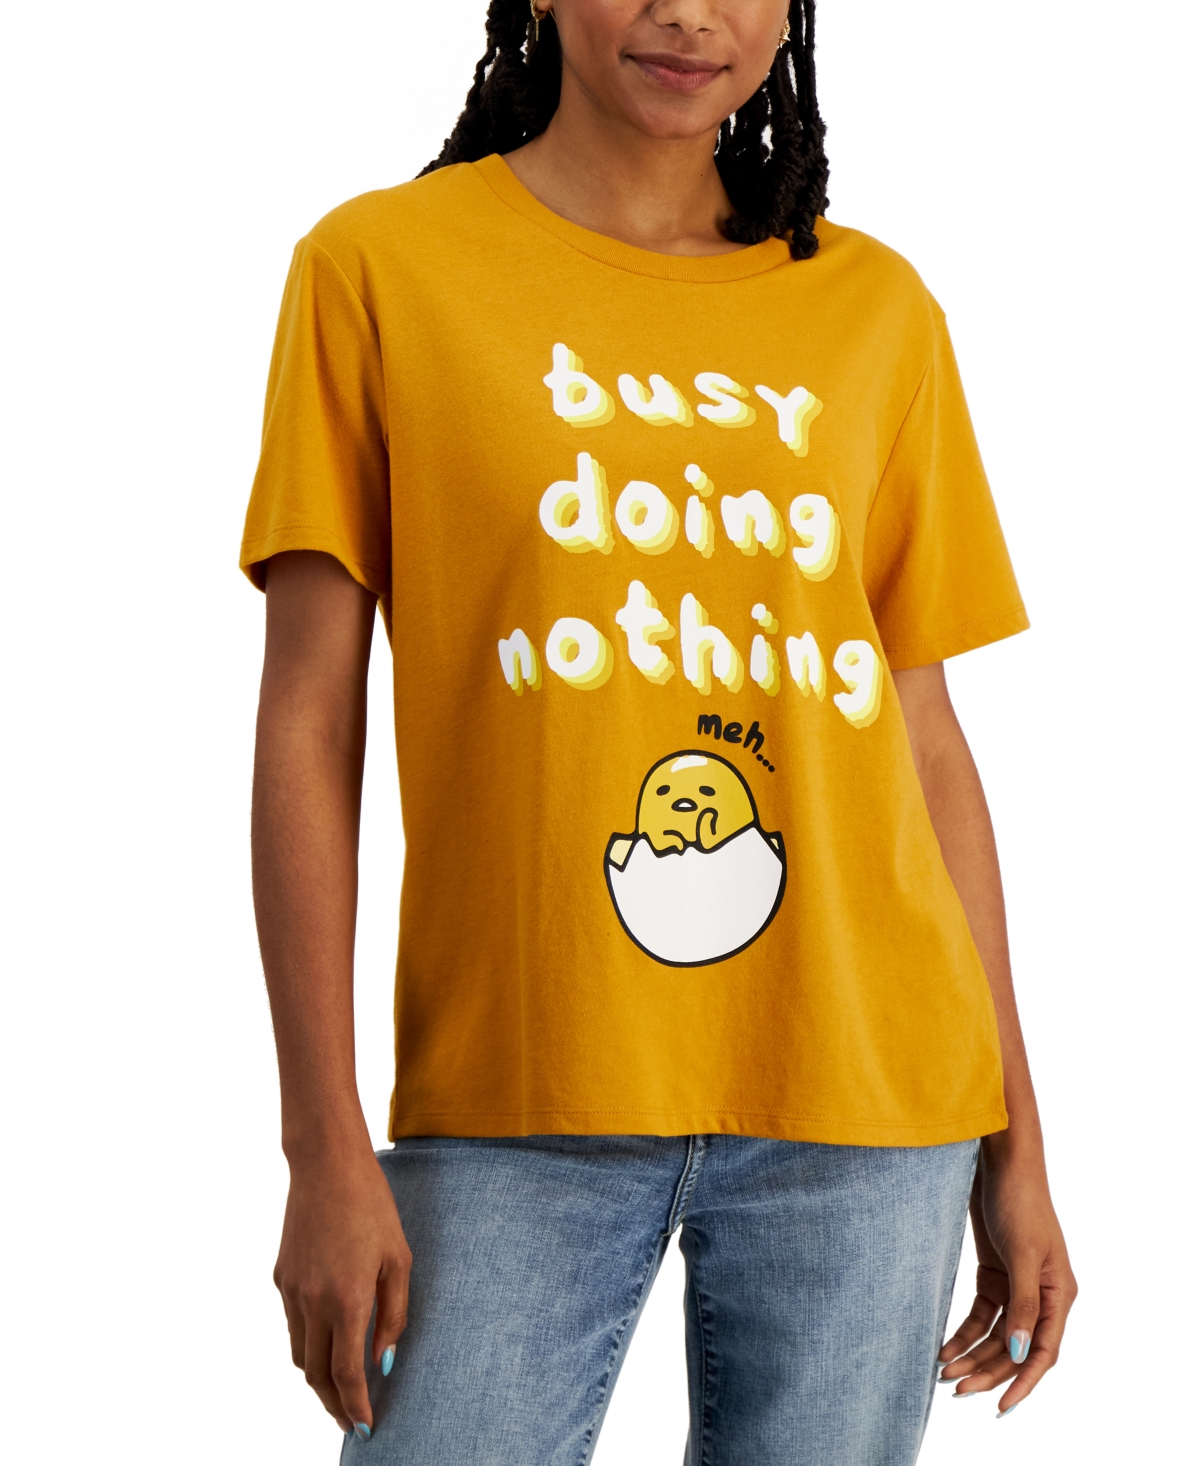 Juniors' Gudetama Busy Doing Nothing T-Shirt - Gold